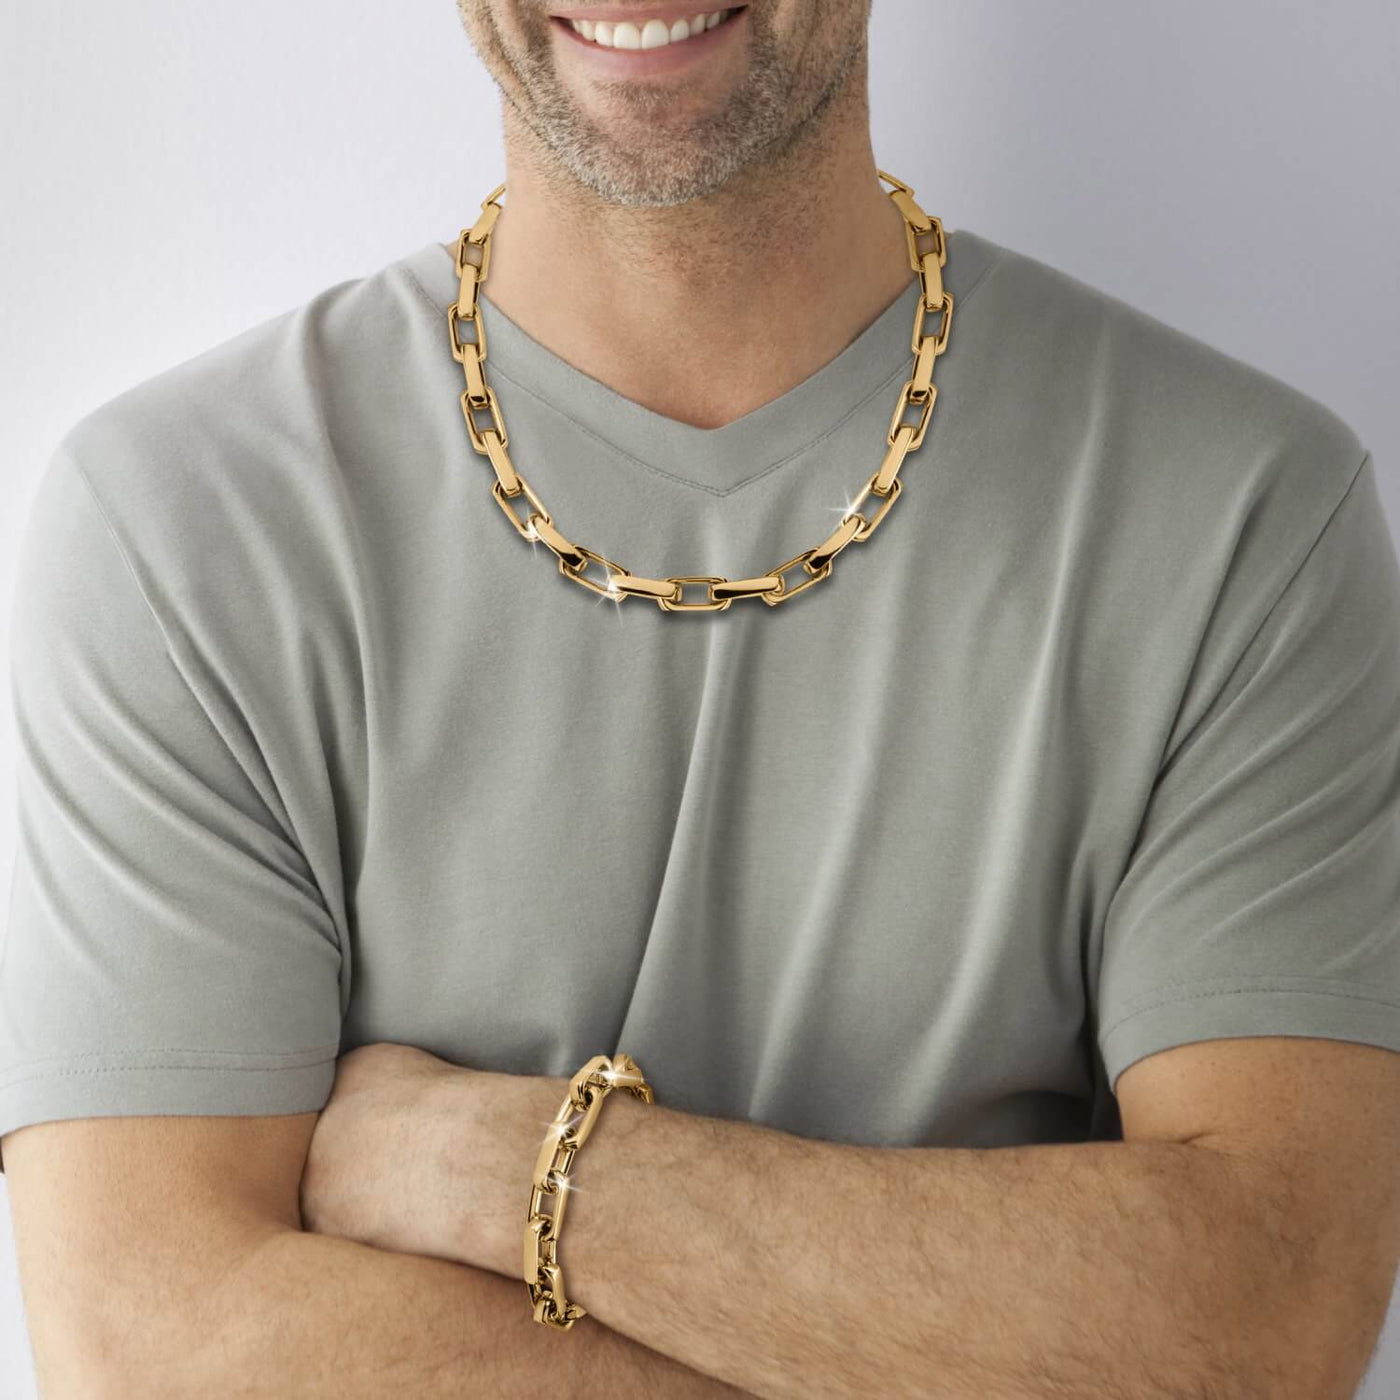 Daniel Steiger Insignia Golden Bracelet